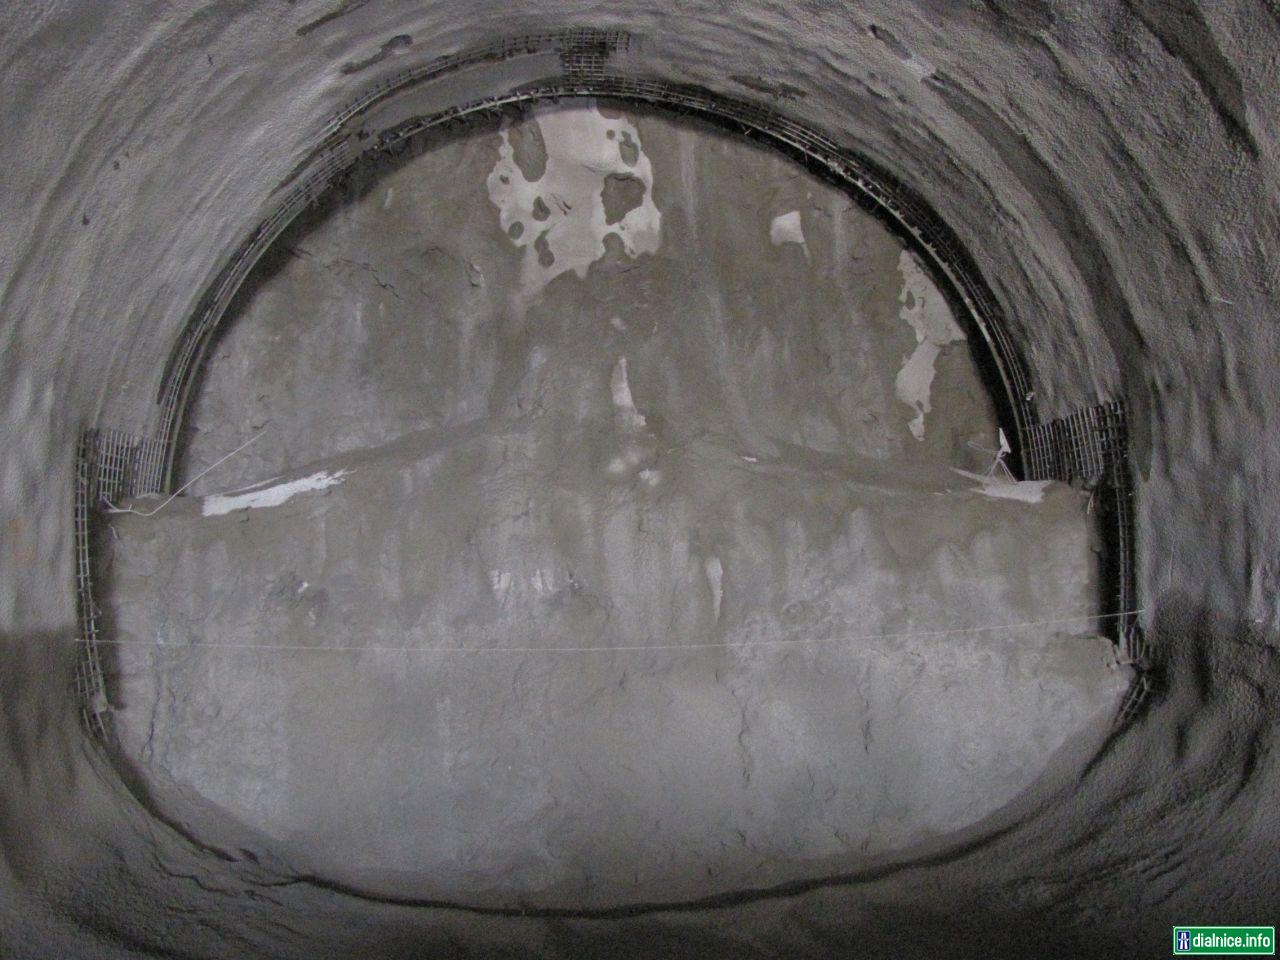 Tunel Ovčiarsko - Západný portál, južná tunelová rúra